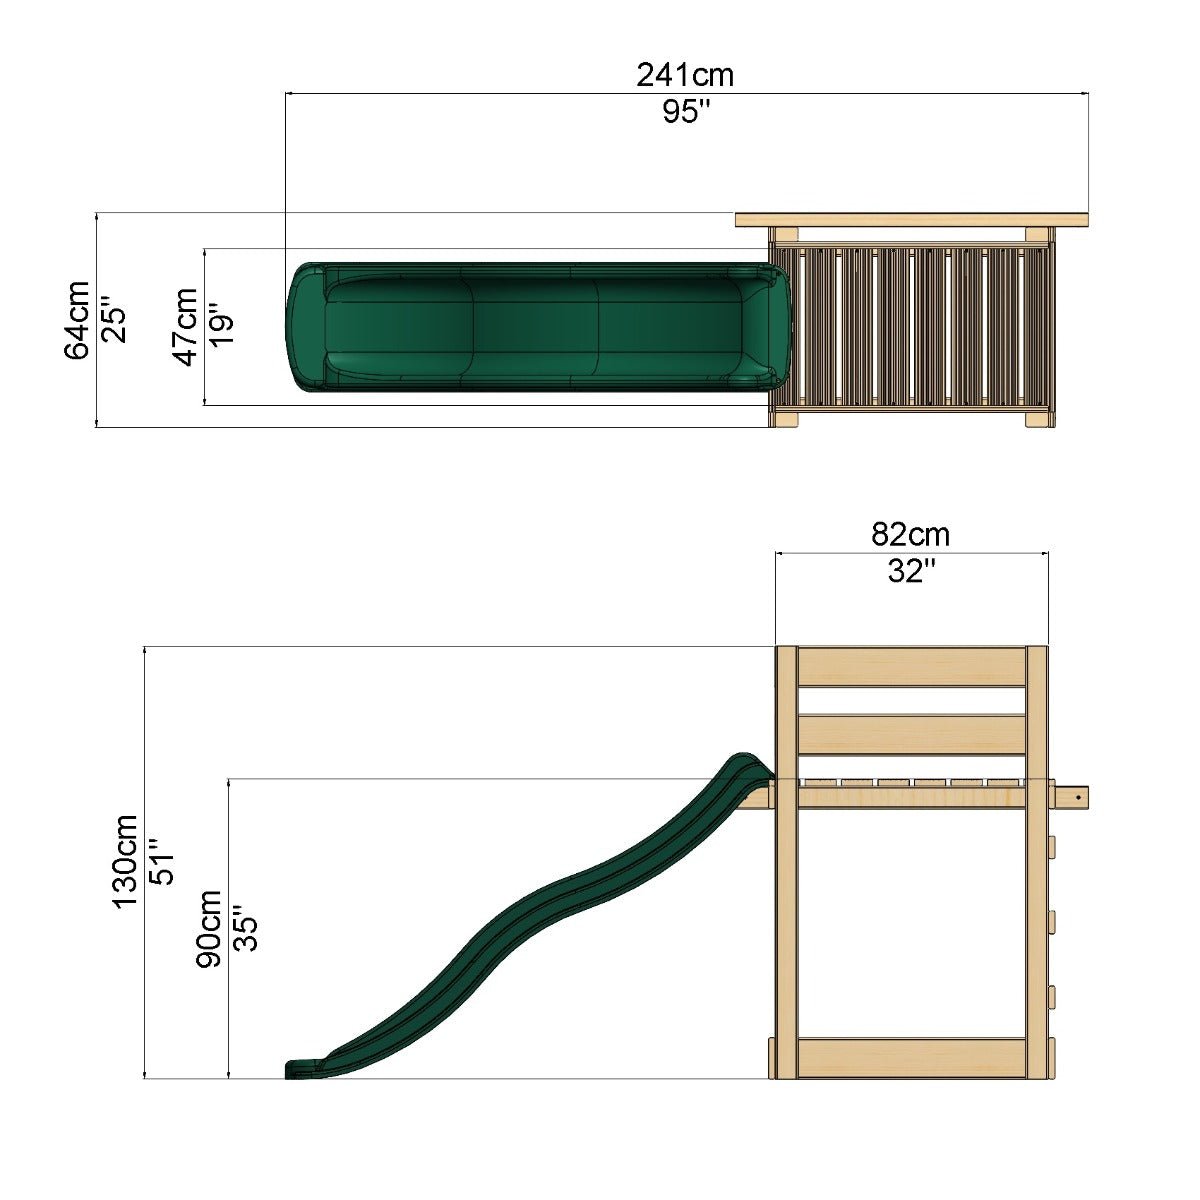 Add-on Wooden Platform with 6FT Slide for Rebo Wooden Garden Swing Sets